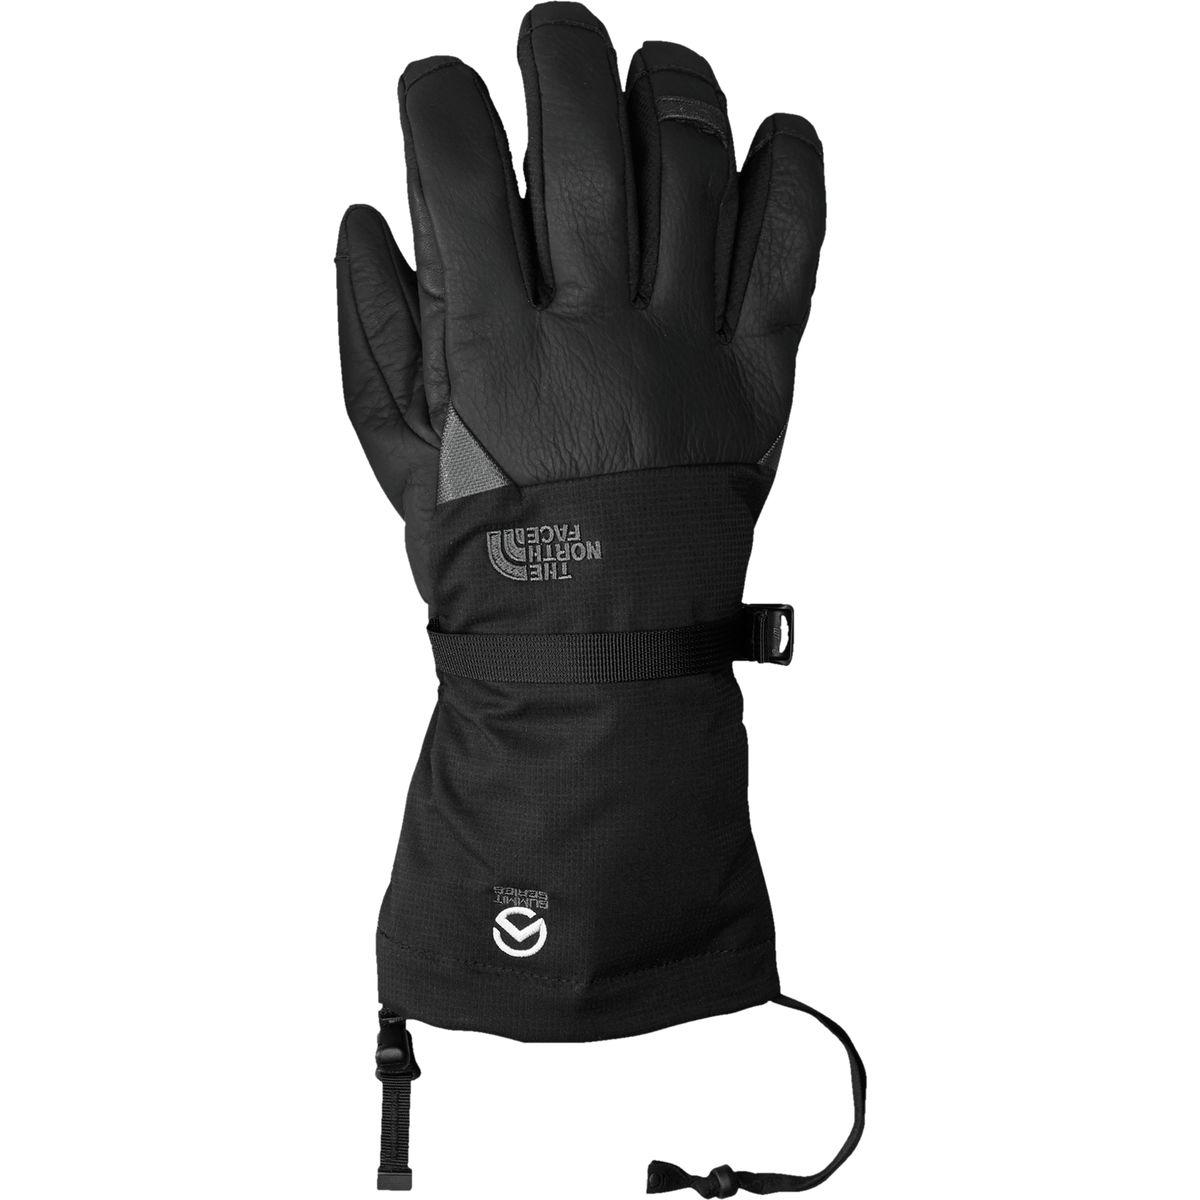 Leather Patrol Long Gauntlet Glove 